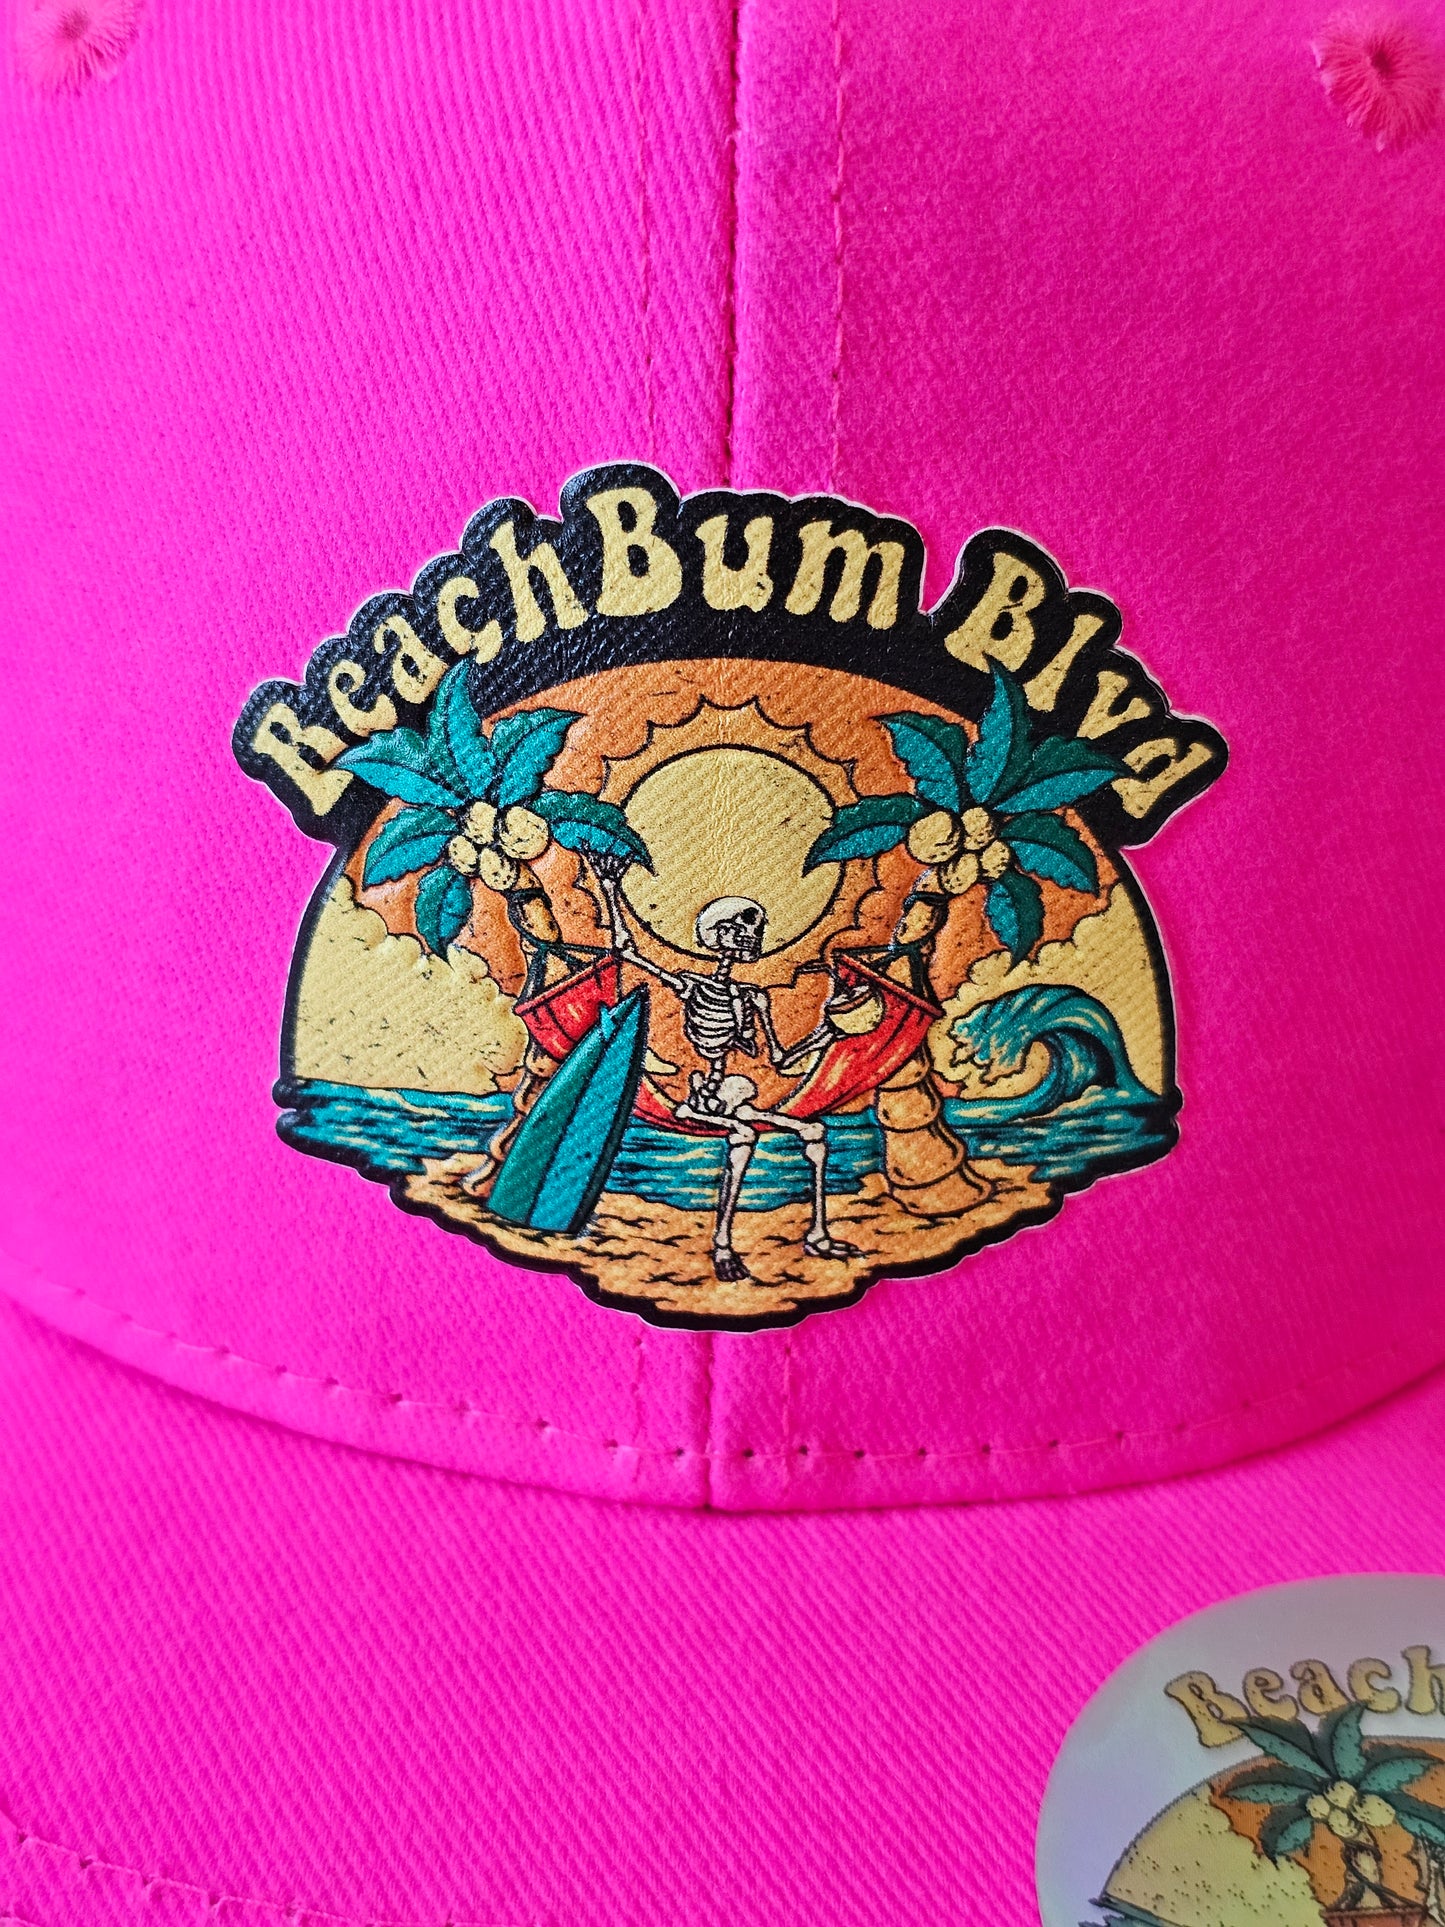 Neon Hot Pink BeachBum Blvd Snapback